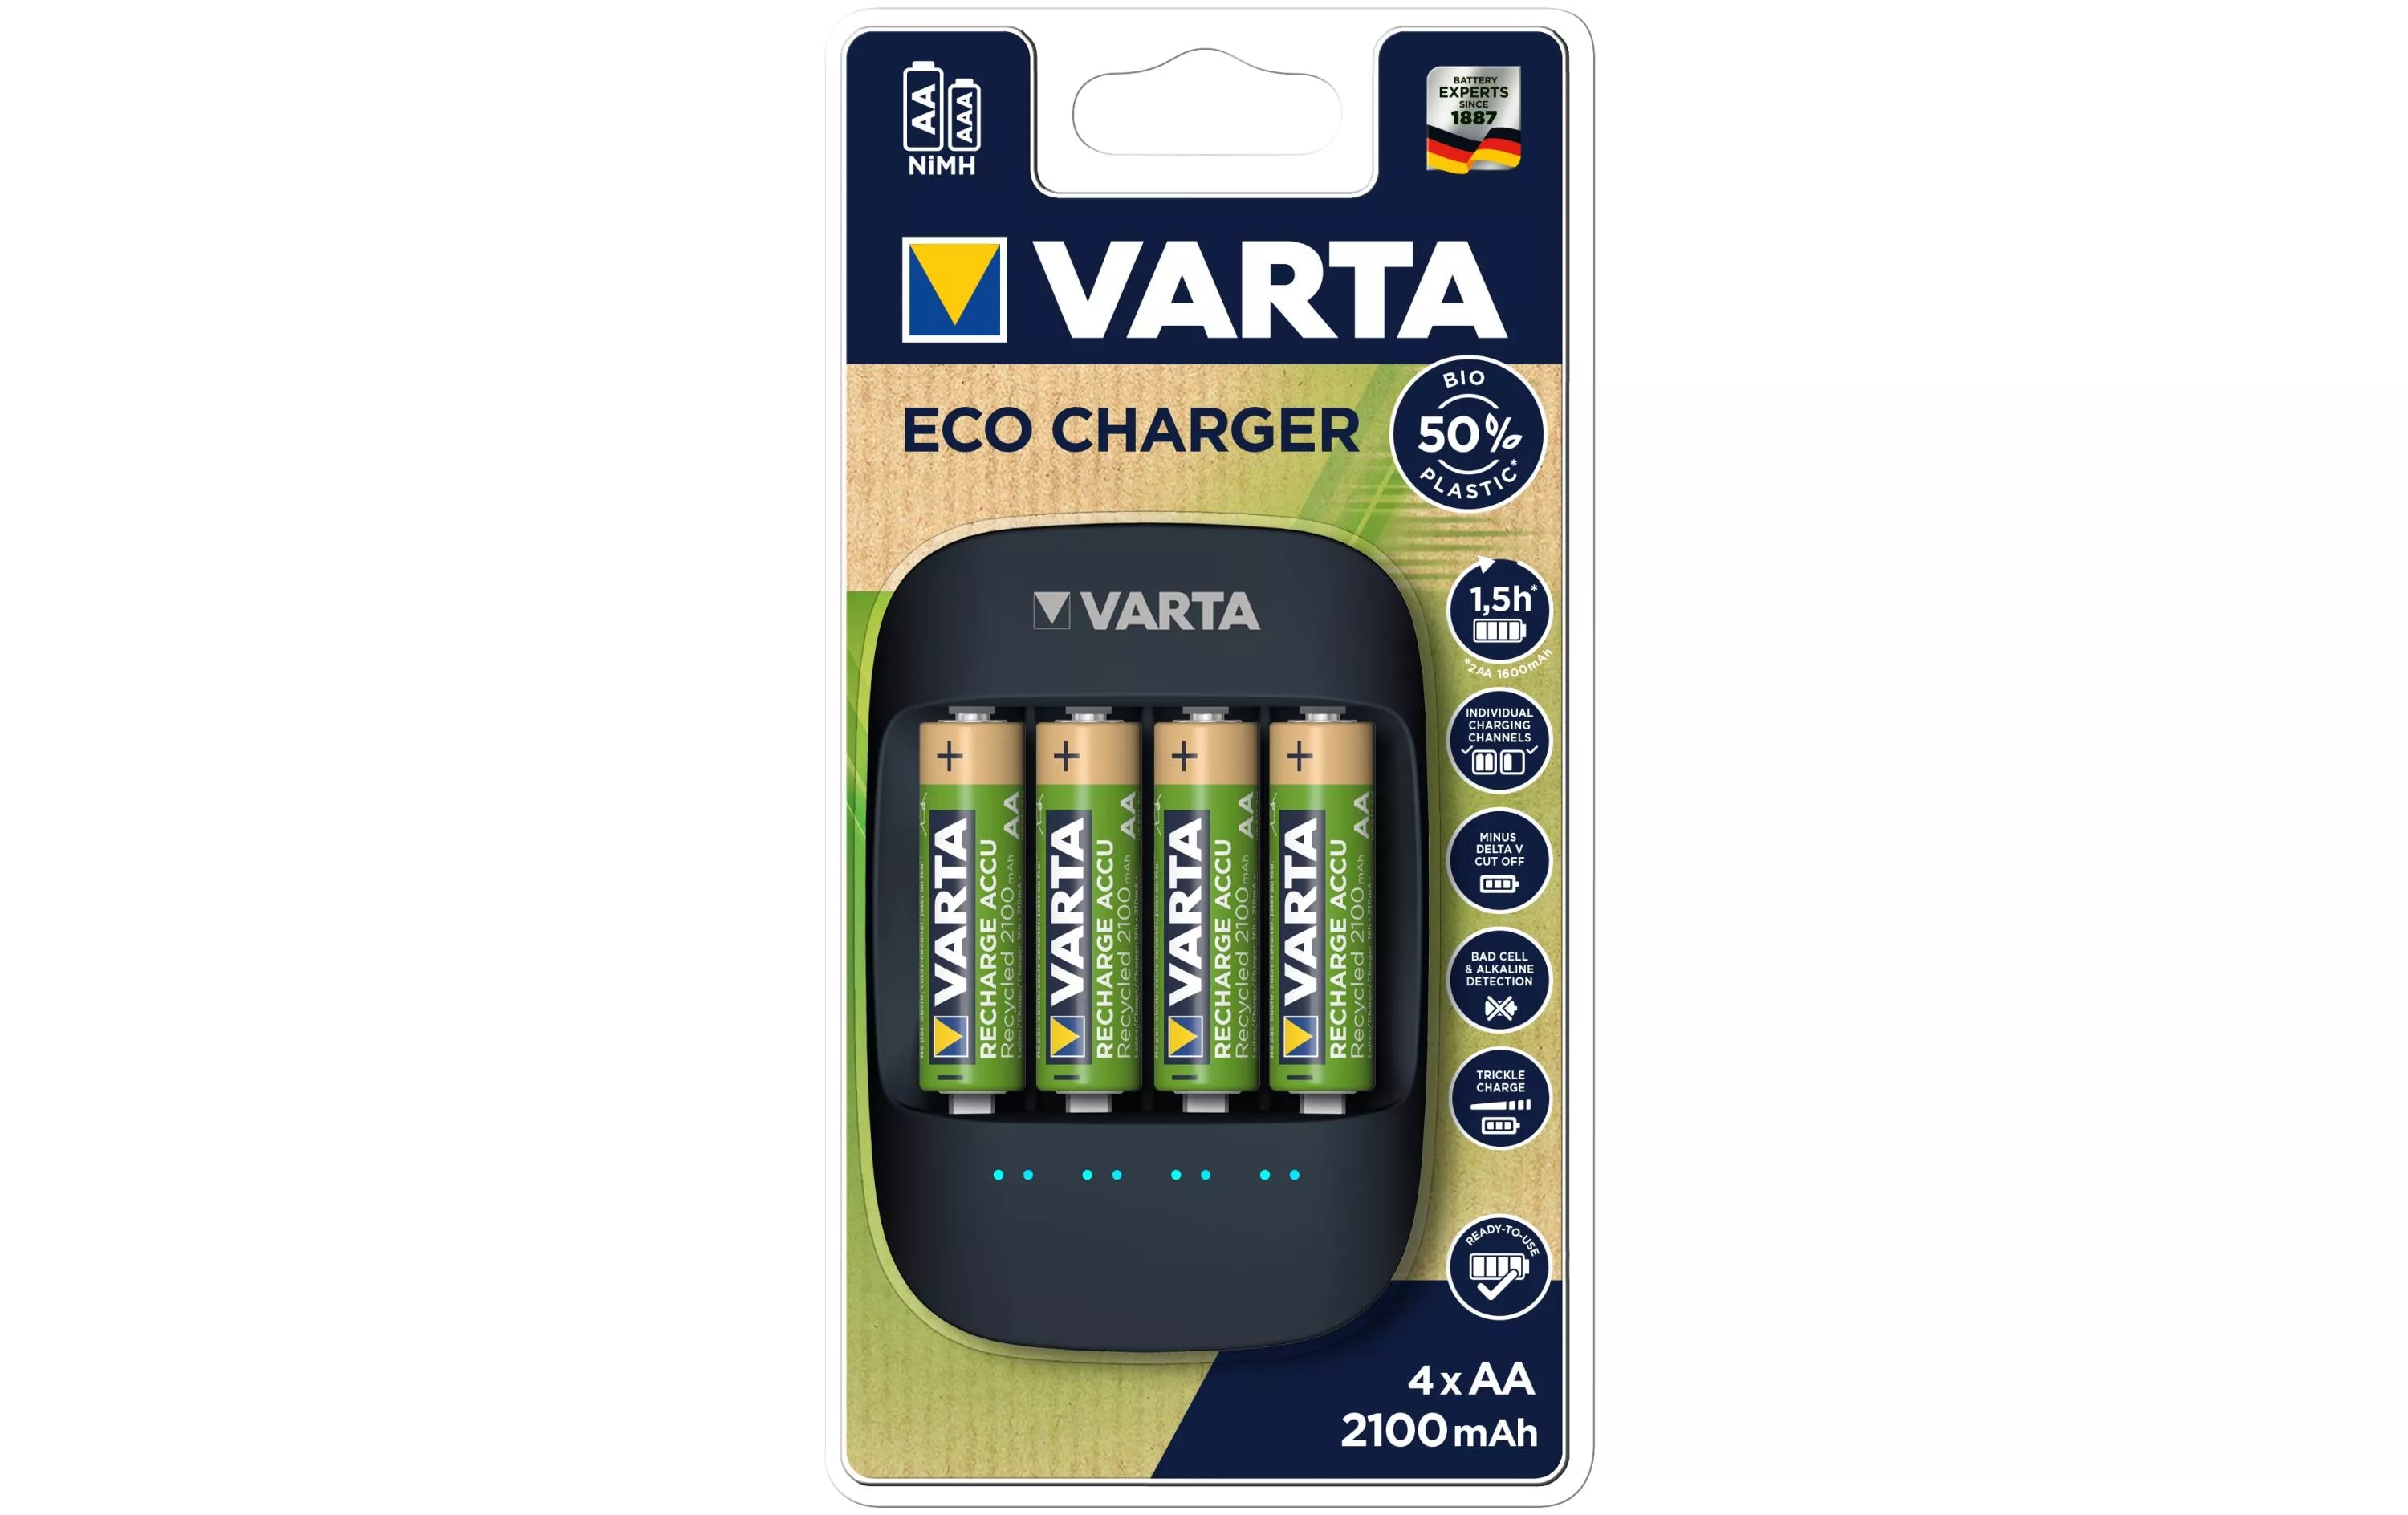 Caricatore Varta Eco Charger incl. 4xAA